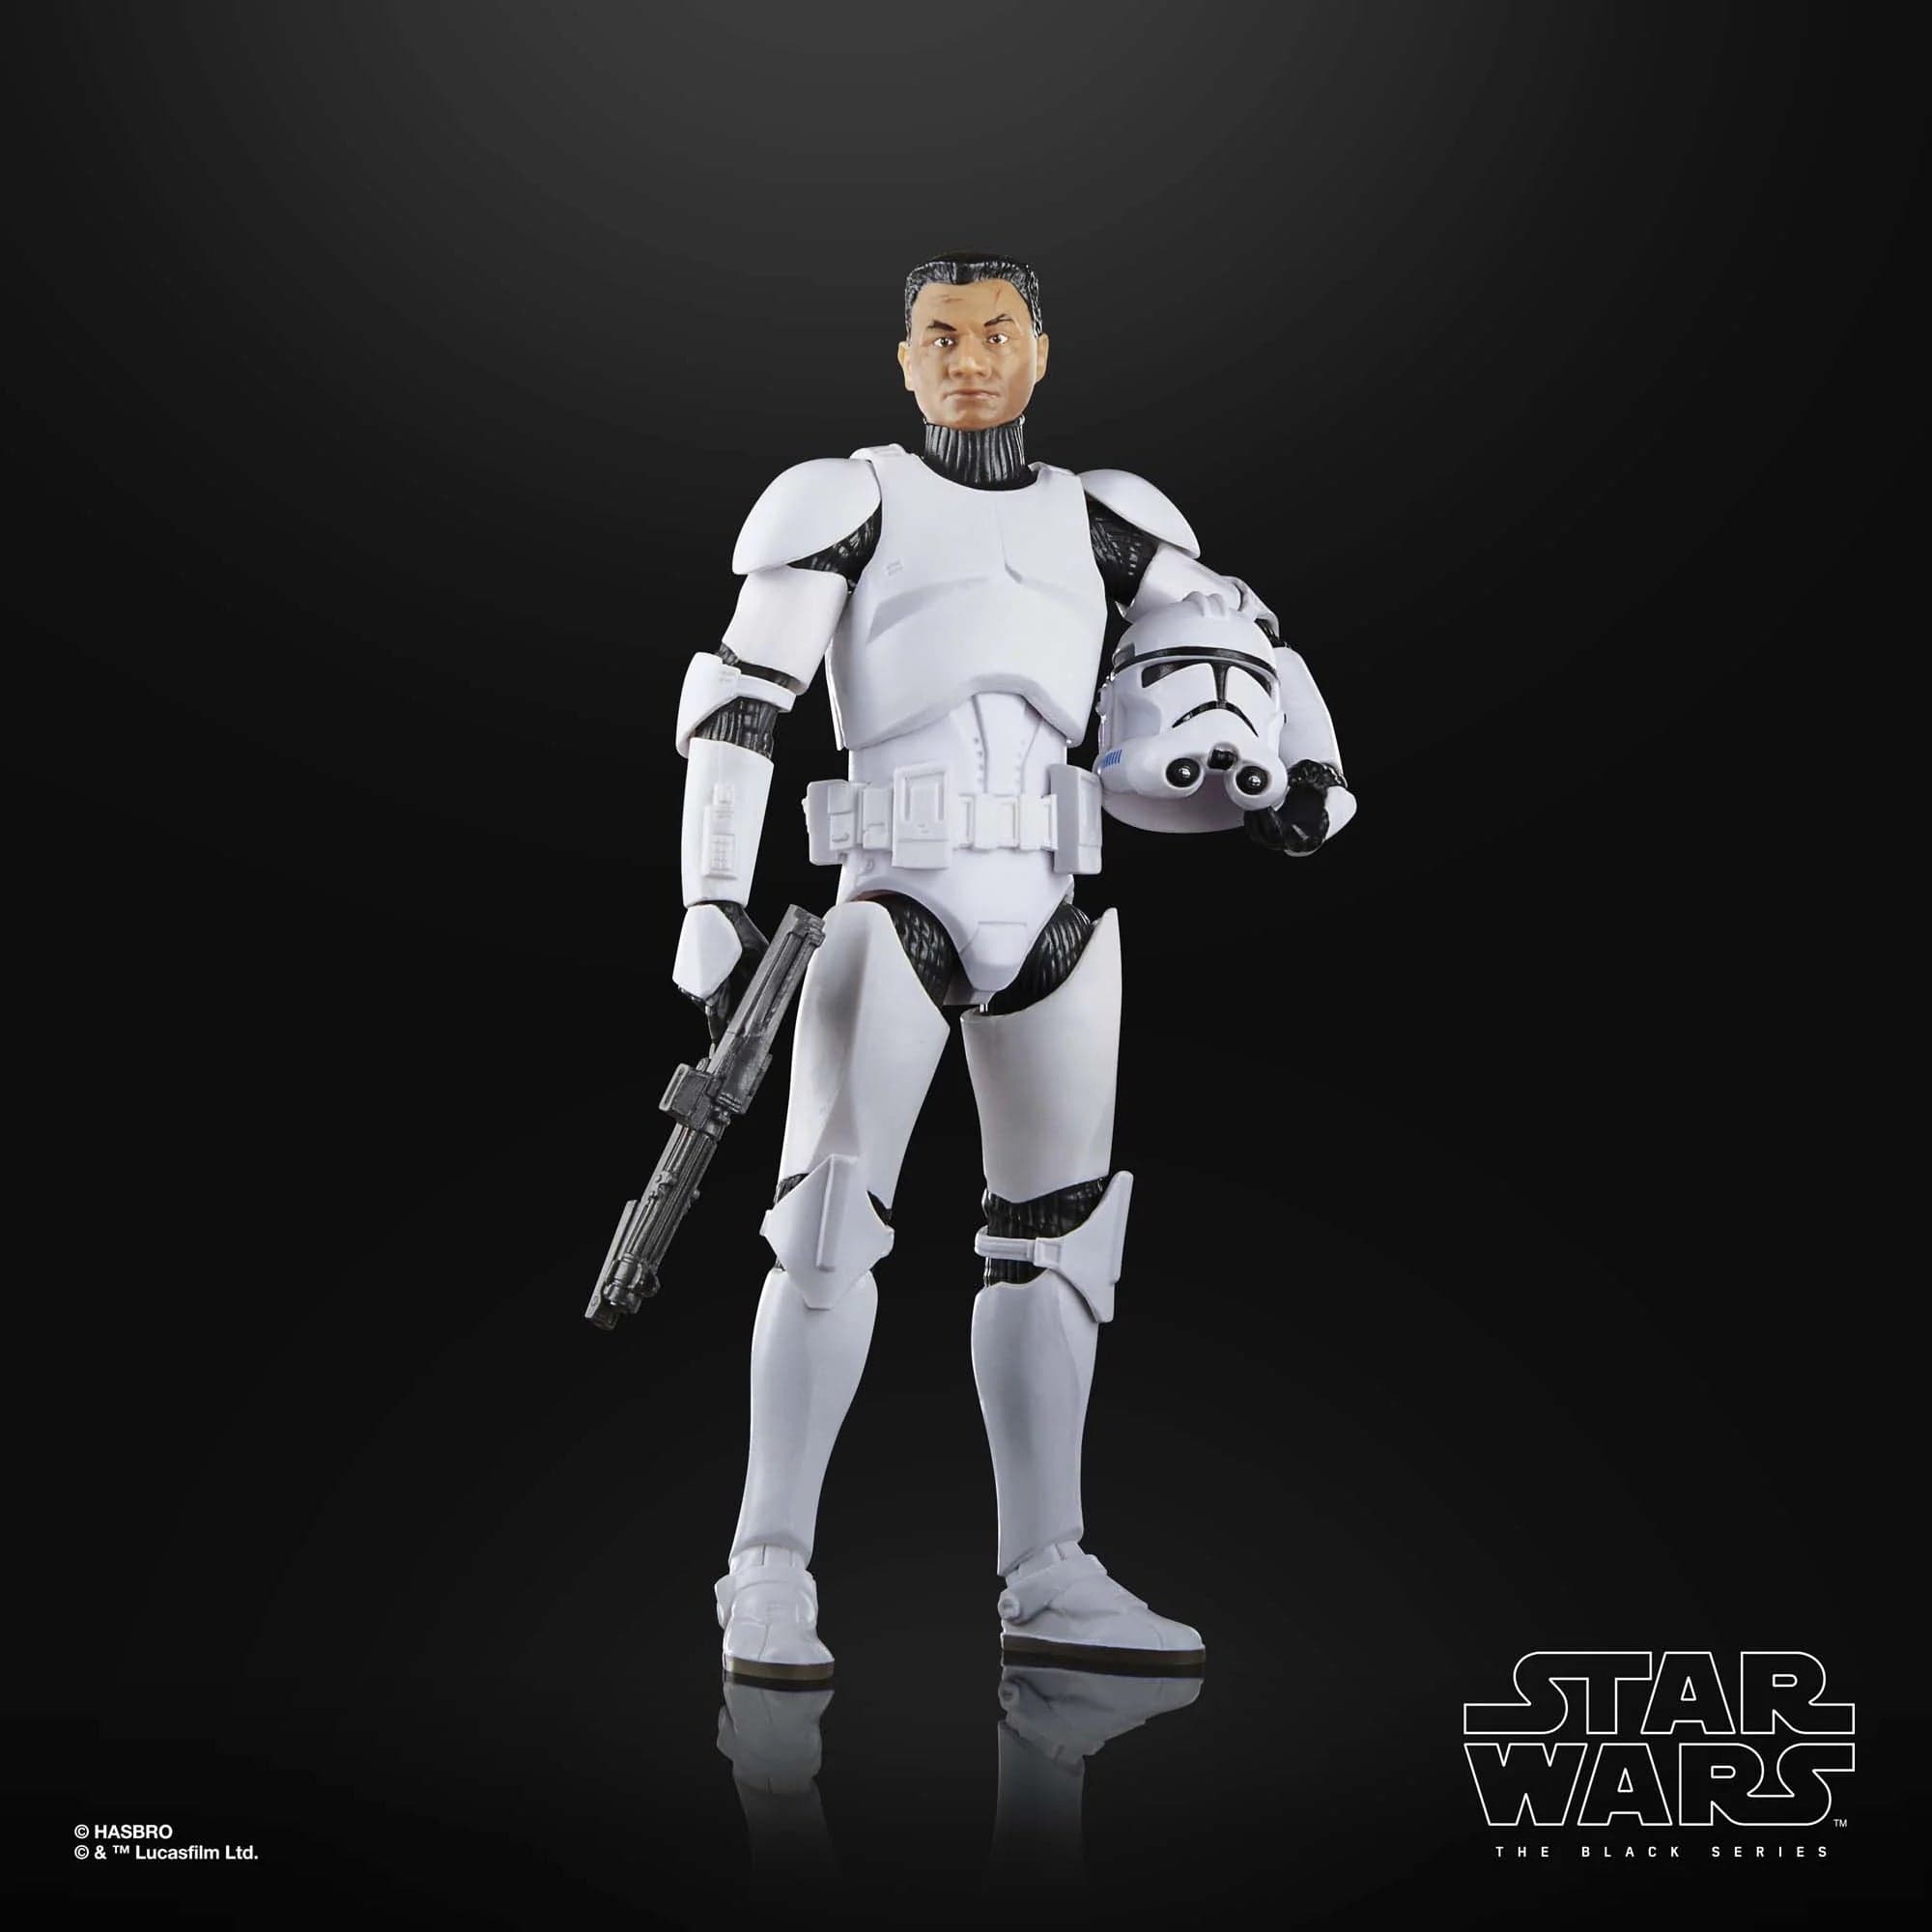 Hasbro Star Wars The Black Series Phase II Clone Trooper Action Figure